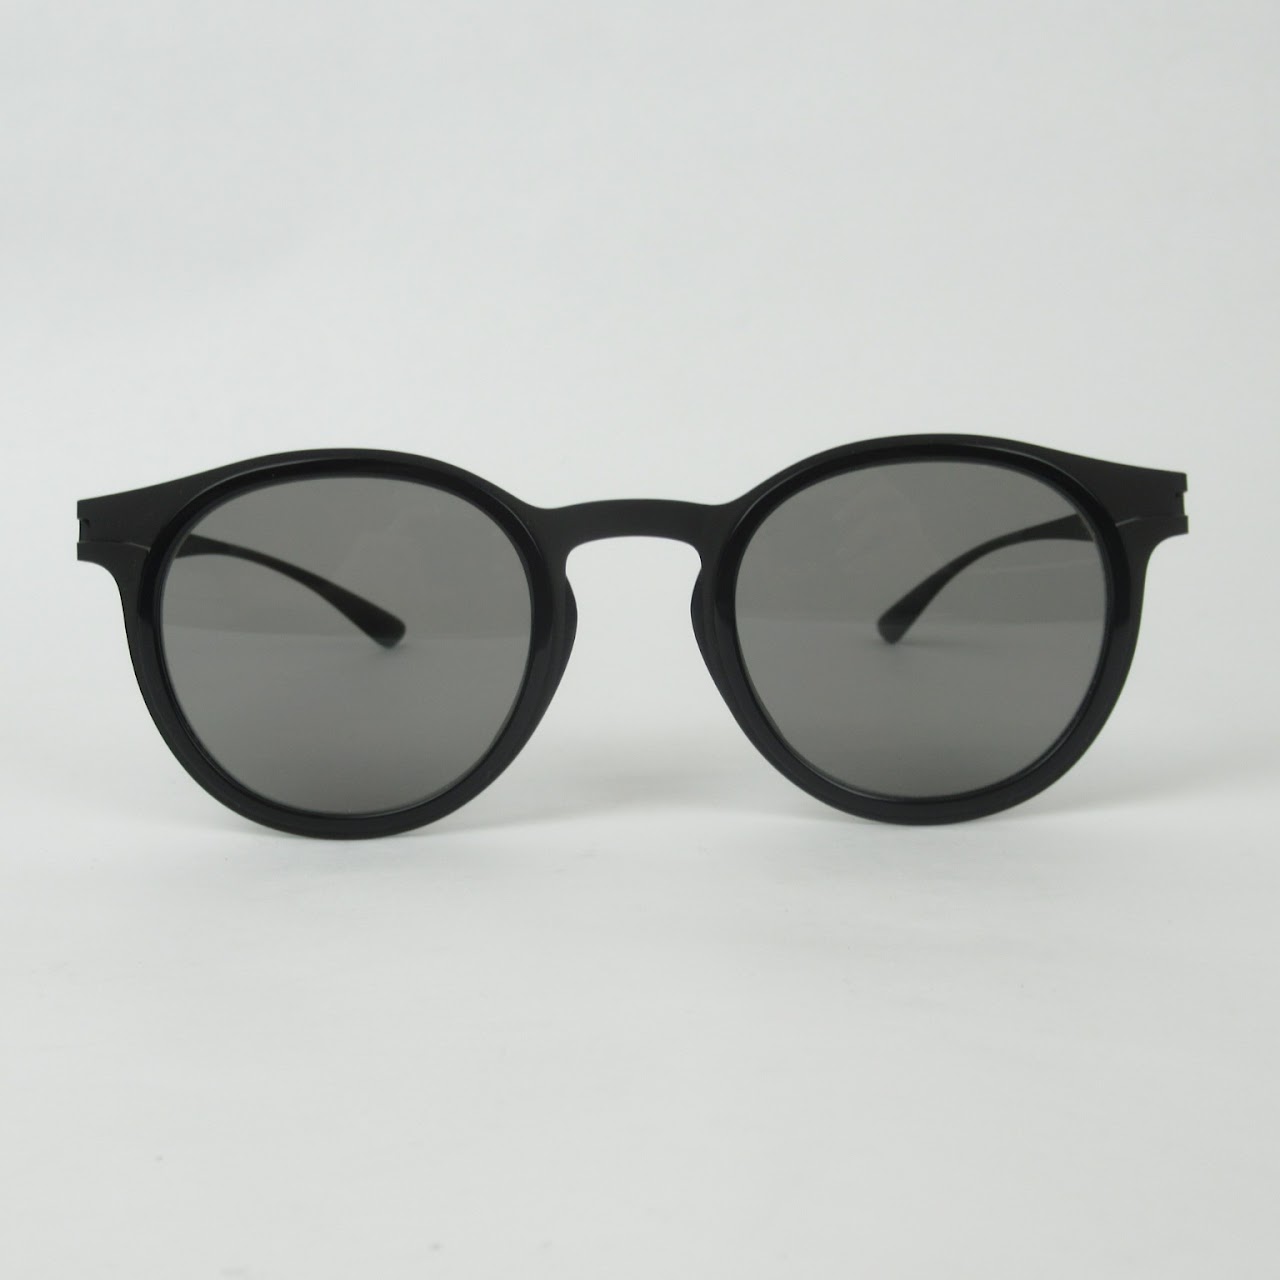 Mykita x Damir Doma Metal Framed Sunglasses